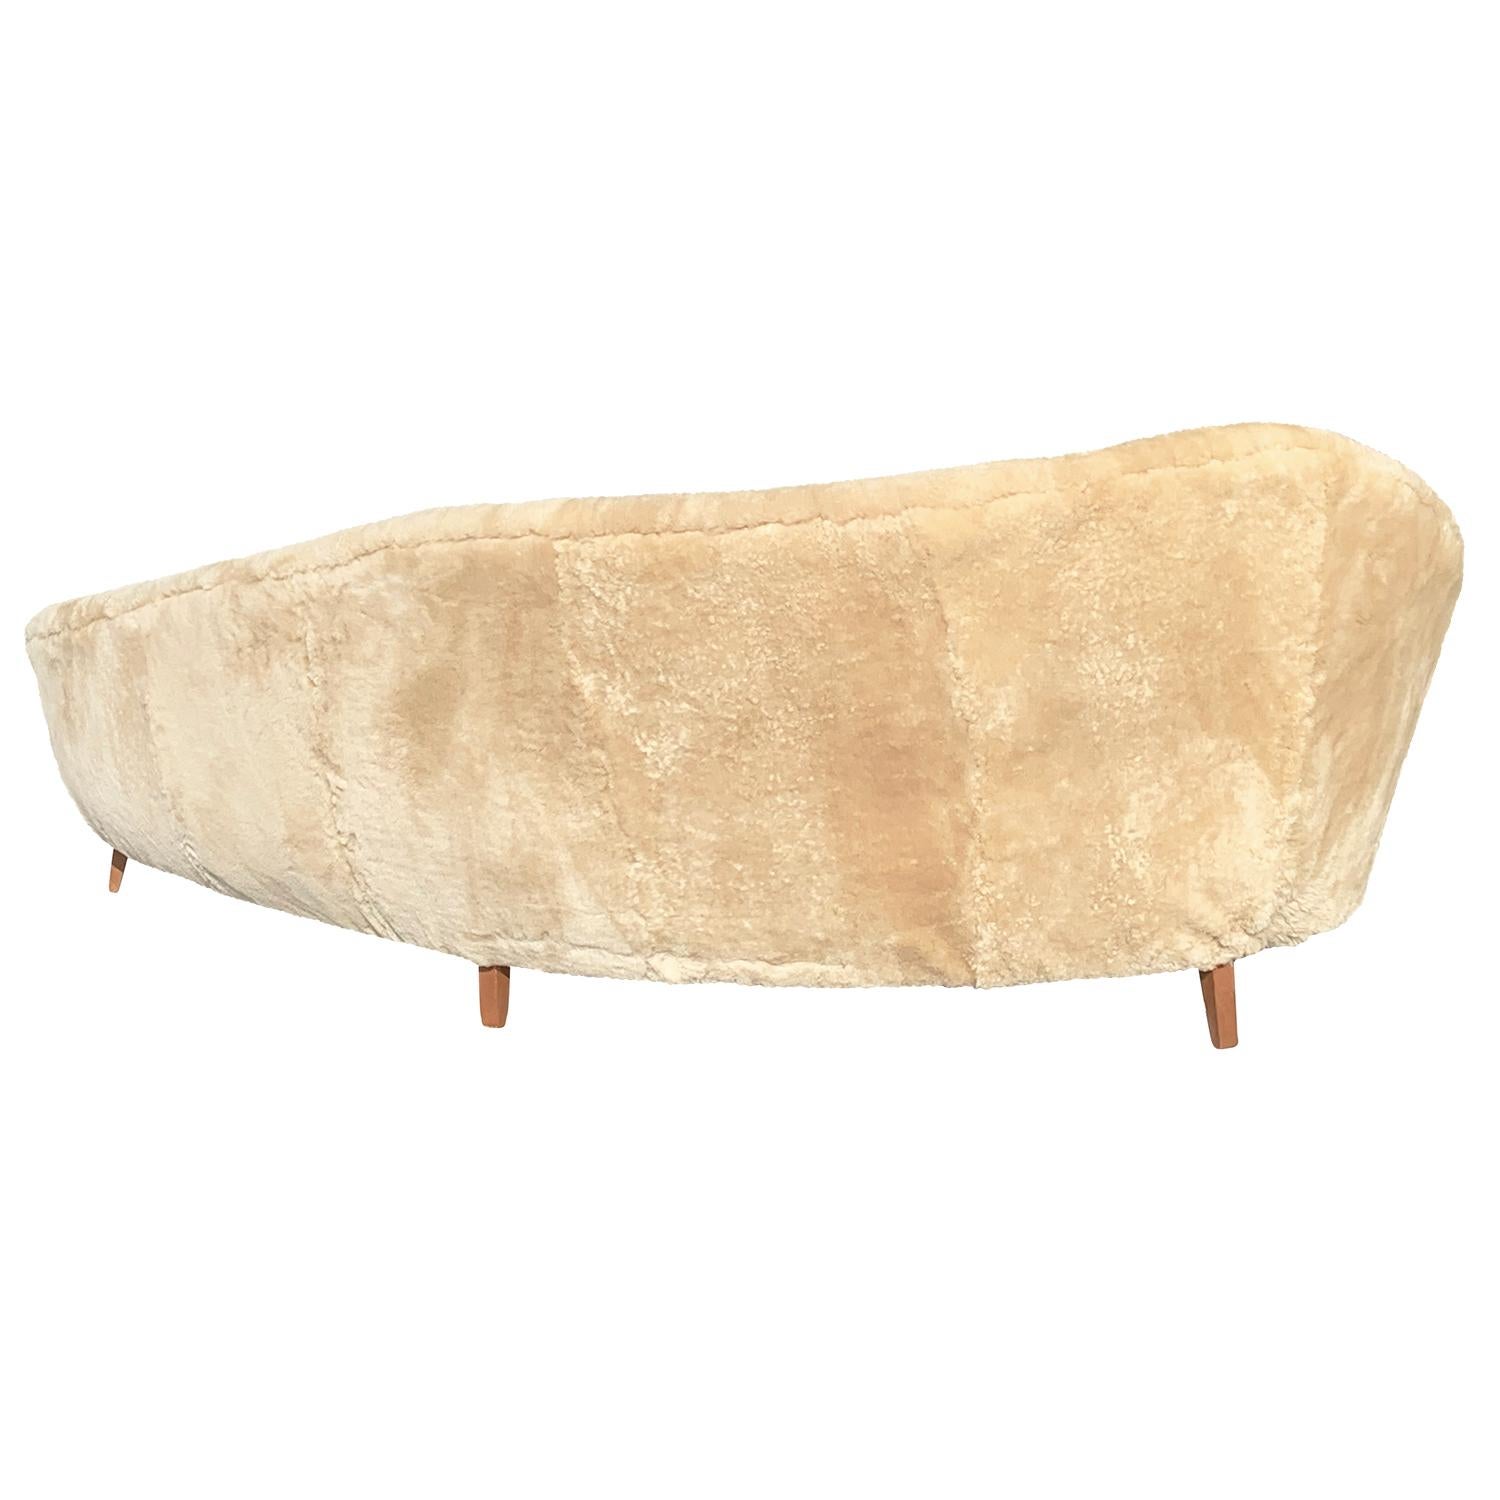 Hand-Carved 20th Century Divano, Curved Sofa by Federico Munari